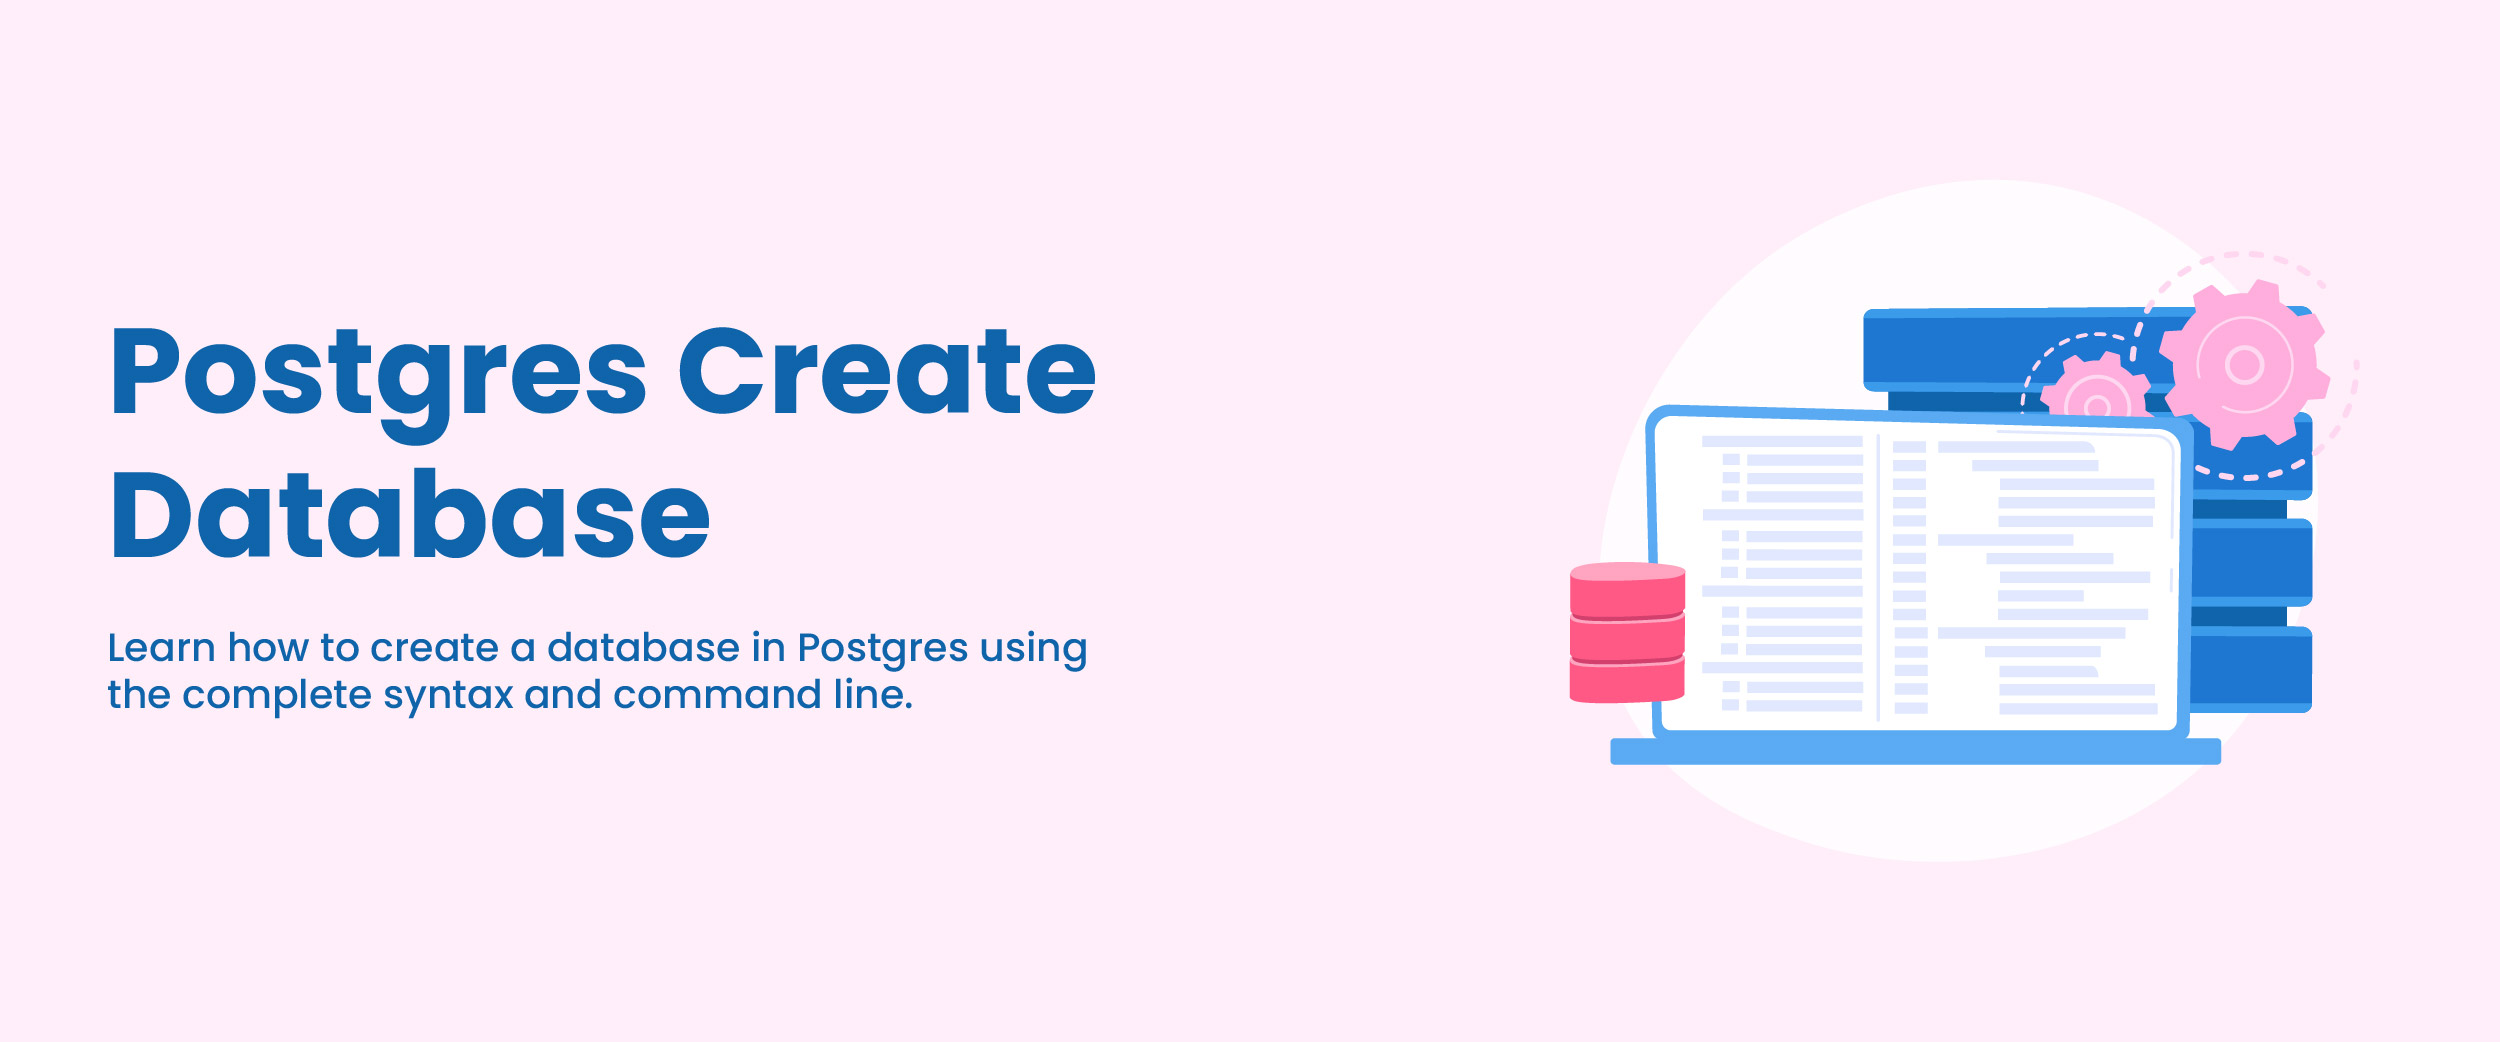 How to Create Database in Postgresql